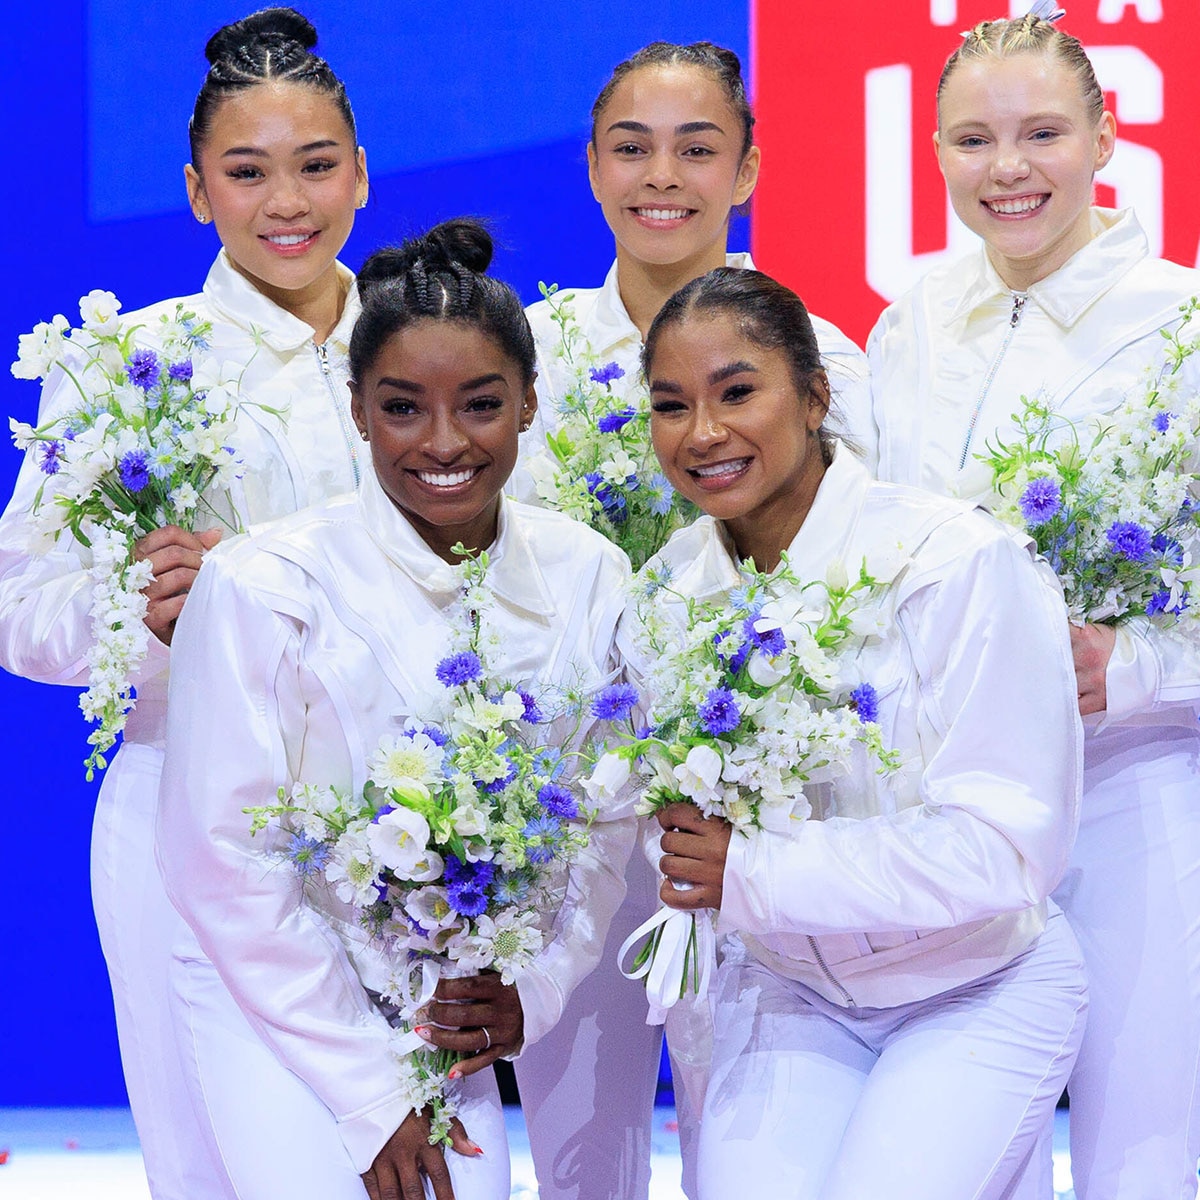 Suni Lee, Hezly Rivera, Jade Carey, Simone Biles, Jordan Chiles, Olympics 2024, Gymnastics